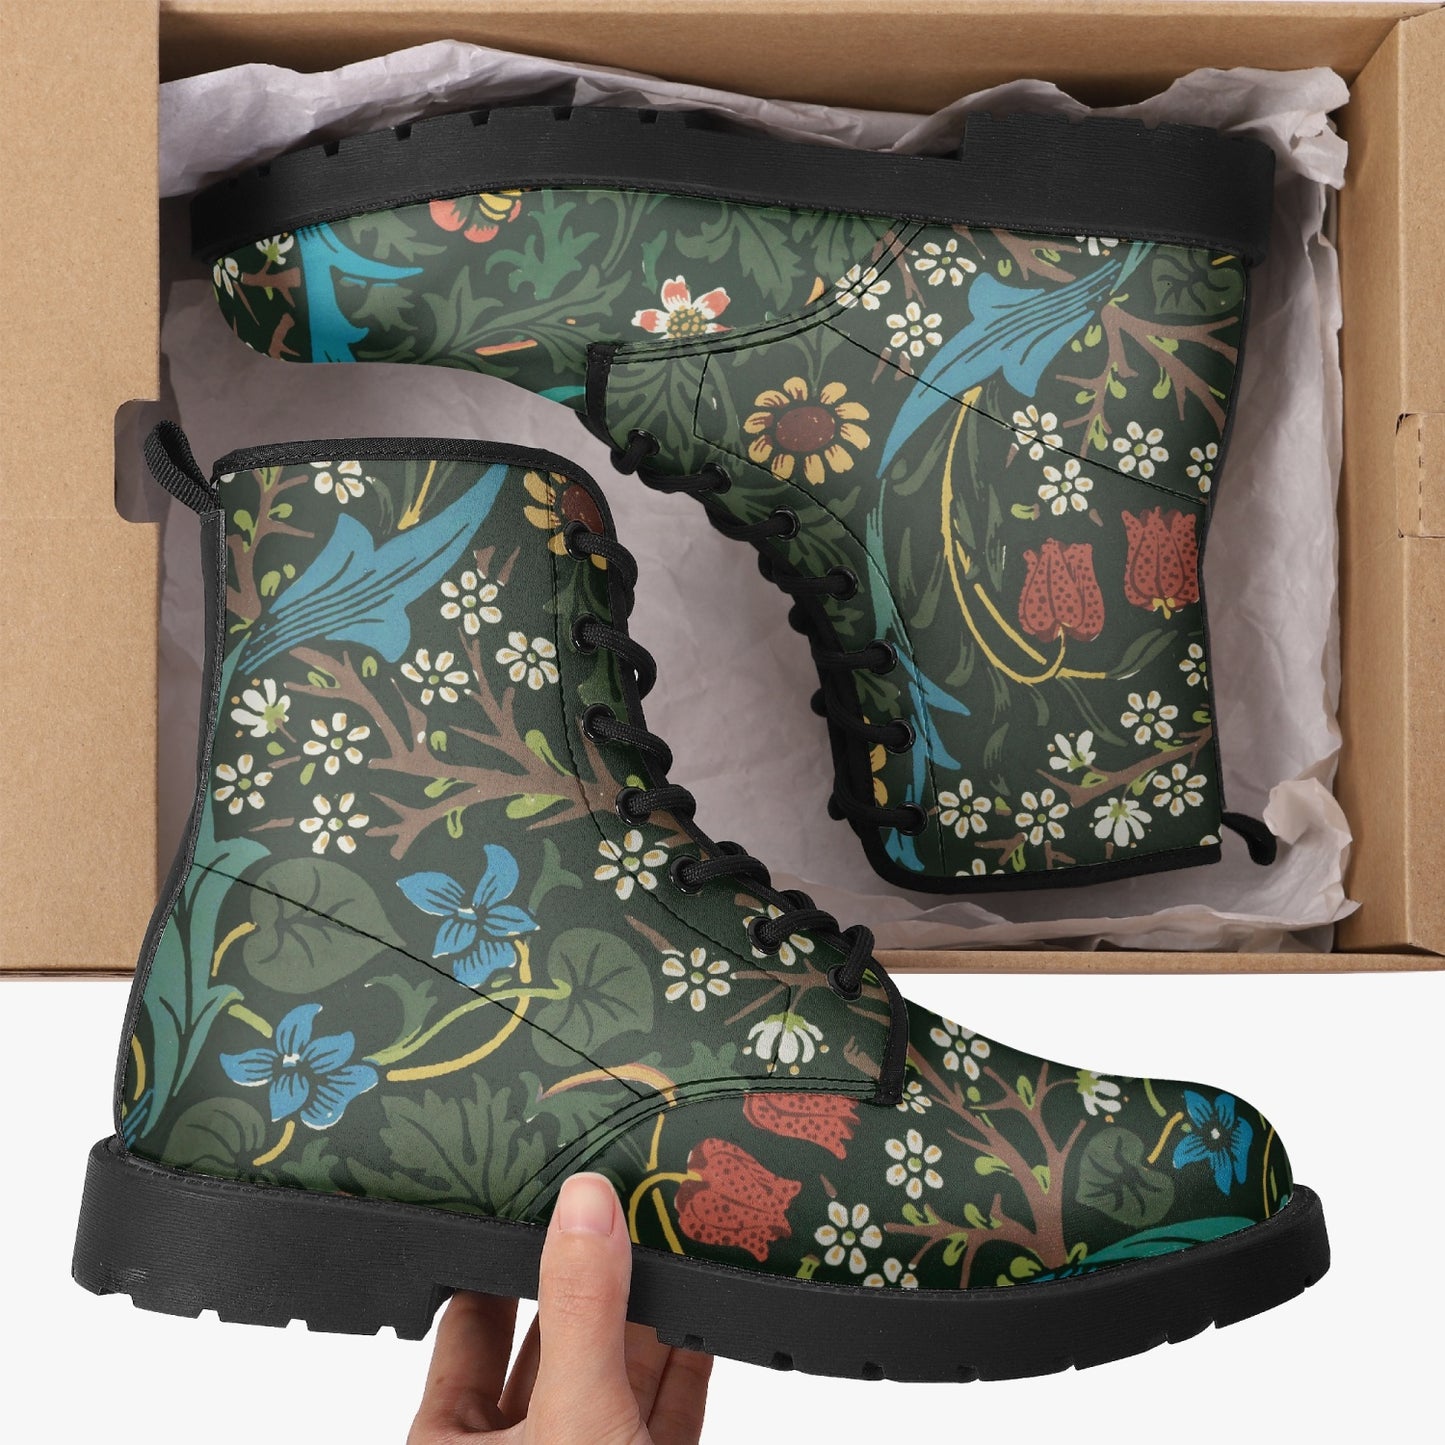 Flowered Boot Docs Style: William Morris Buckthorn Wallpaper Pattern